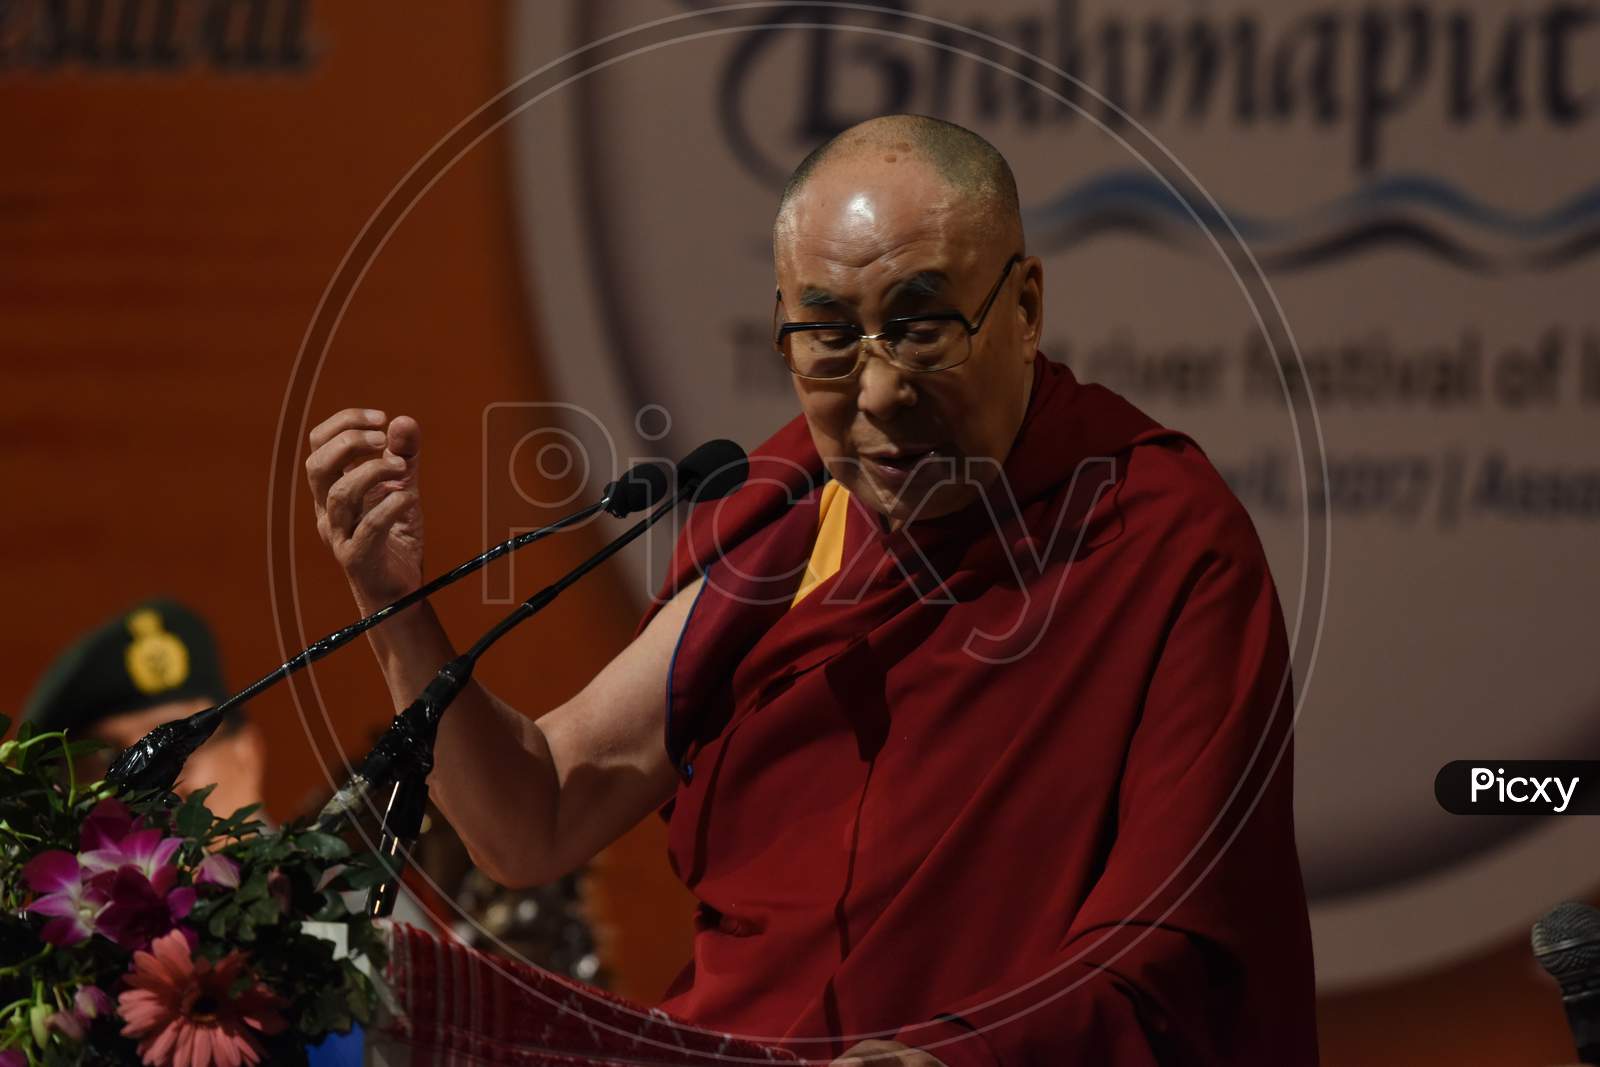 His Holiness Dalai Lama  At Namami Bramaputra Festival Inauguration  in Gawahati  , Assam